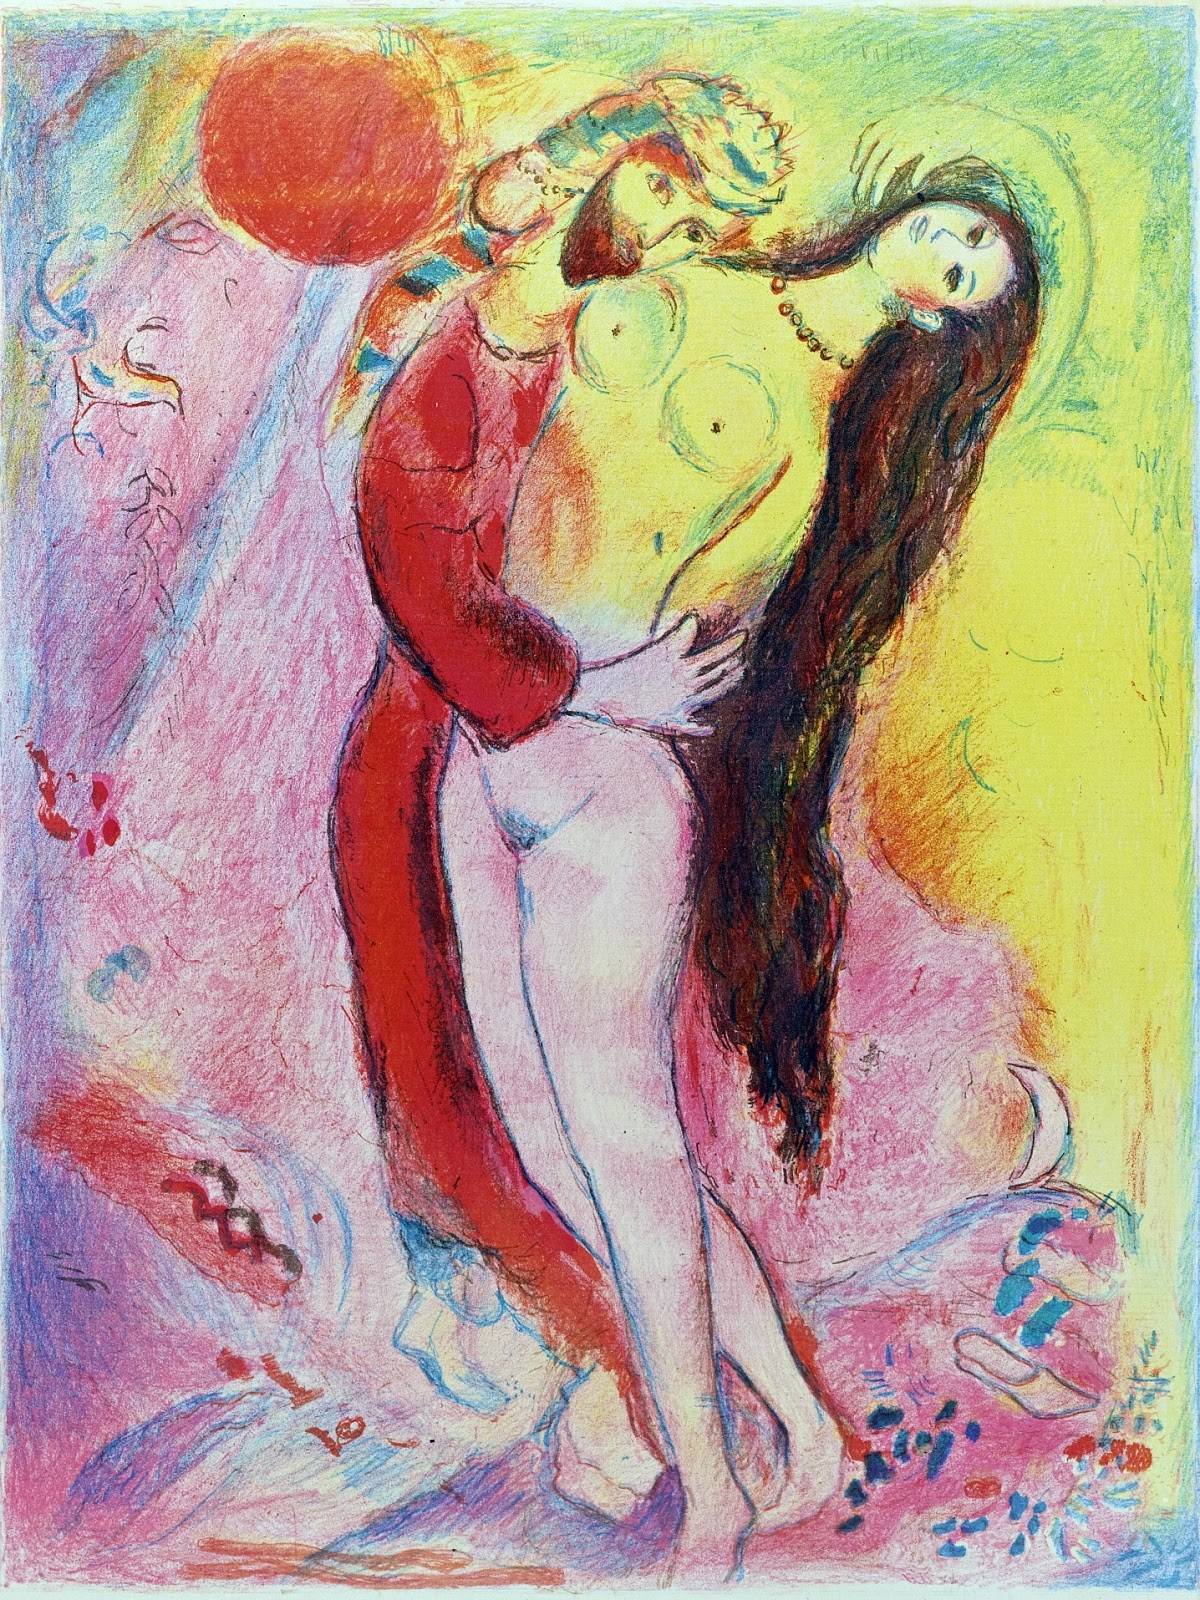 Marc+Chagall-1887-1985 (233).jpg